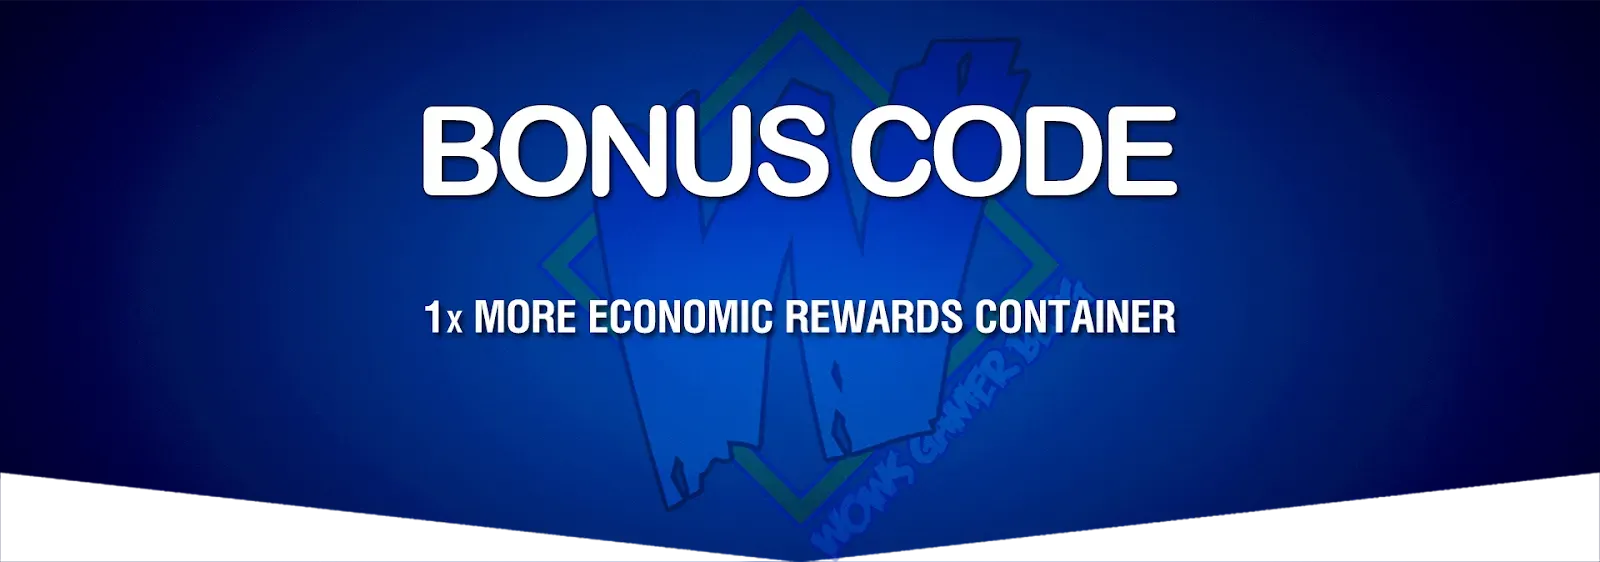 Image of Bonus code banner